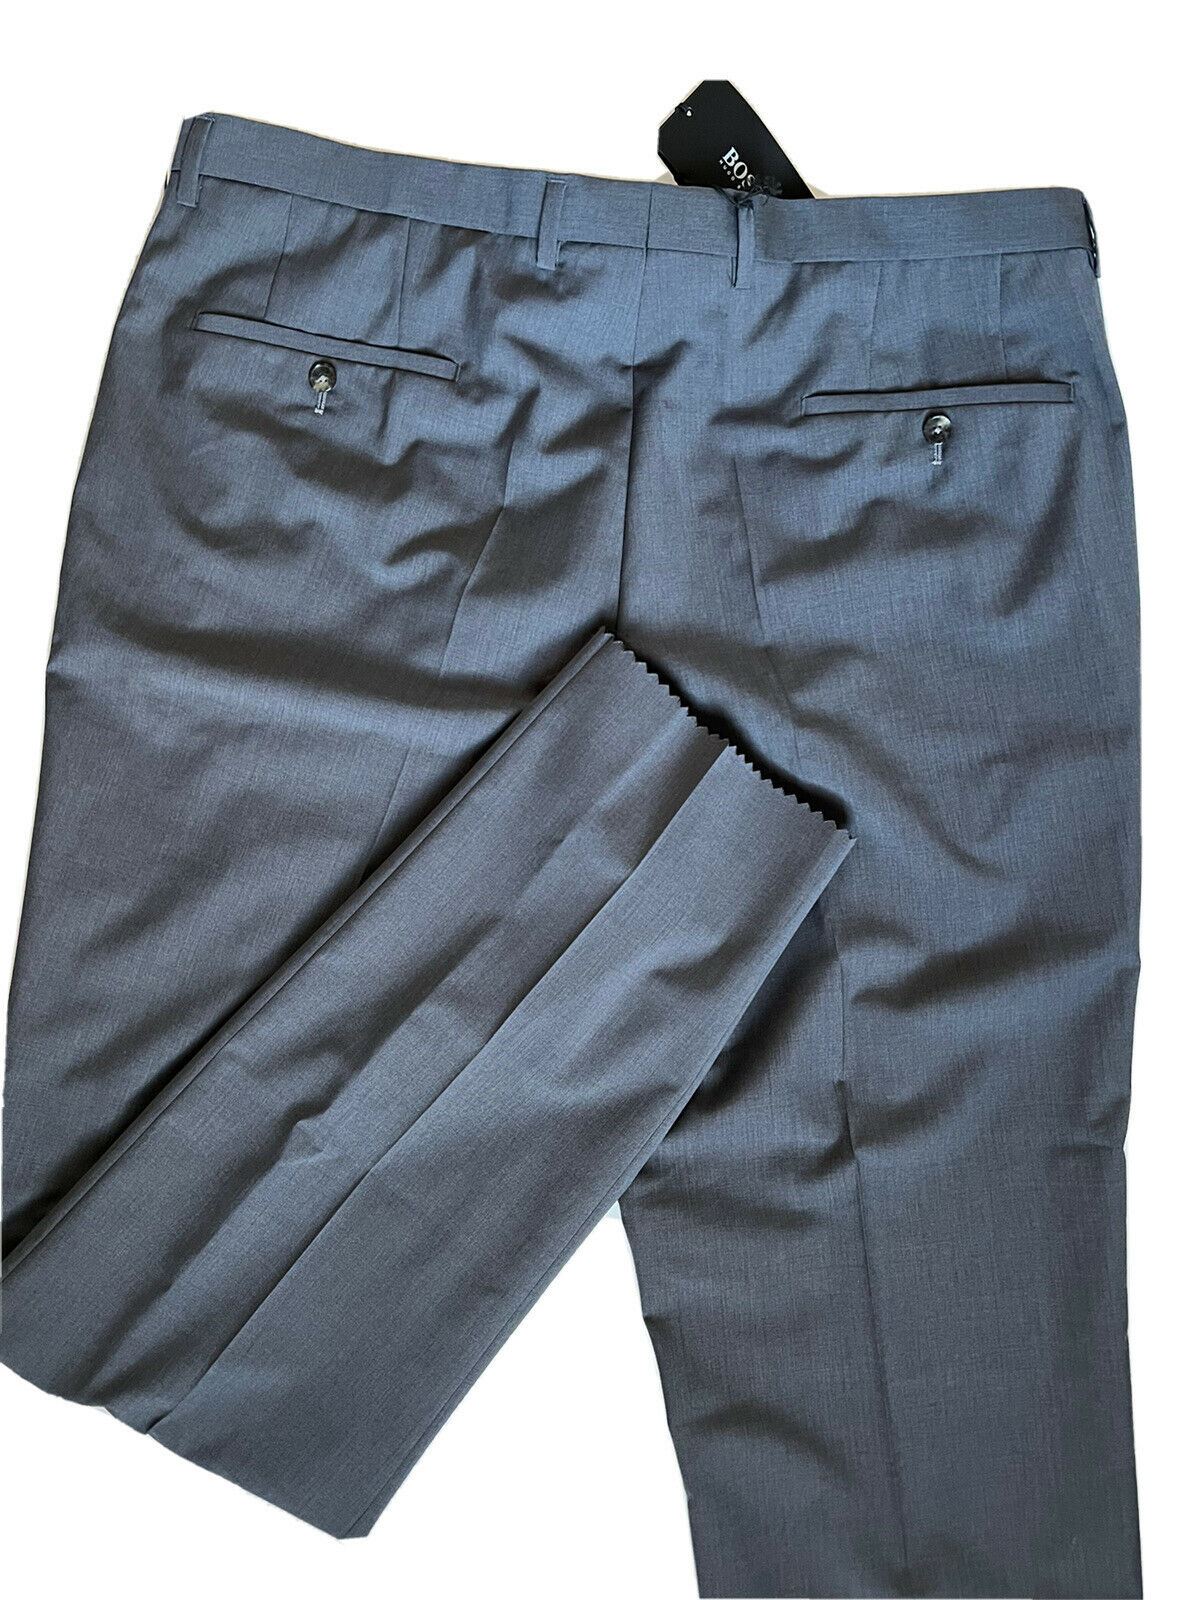 NWT $225 Boss Hugo Boss Men's Wool/Cashmere Dark Gray Dress Pants Size 40R US